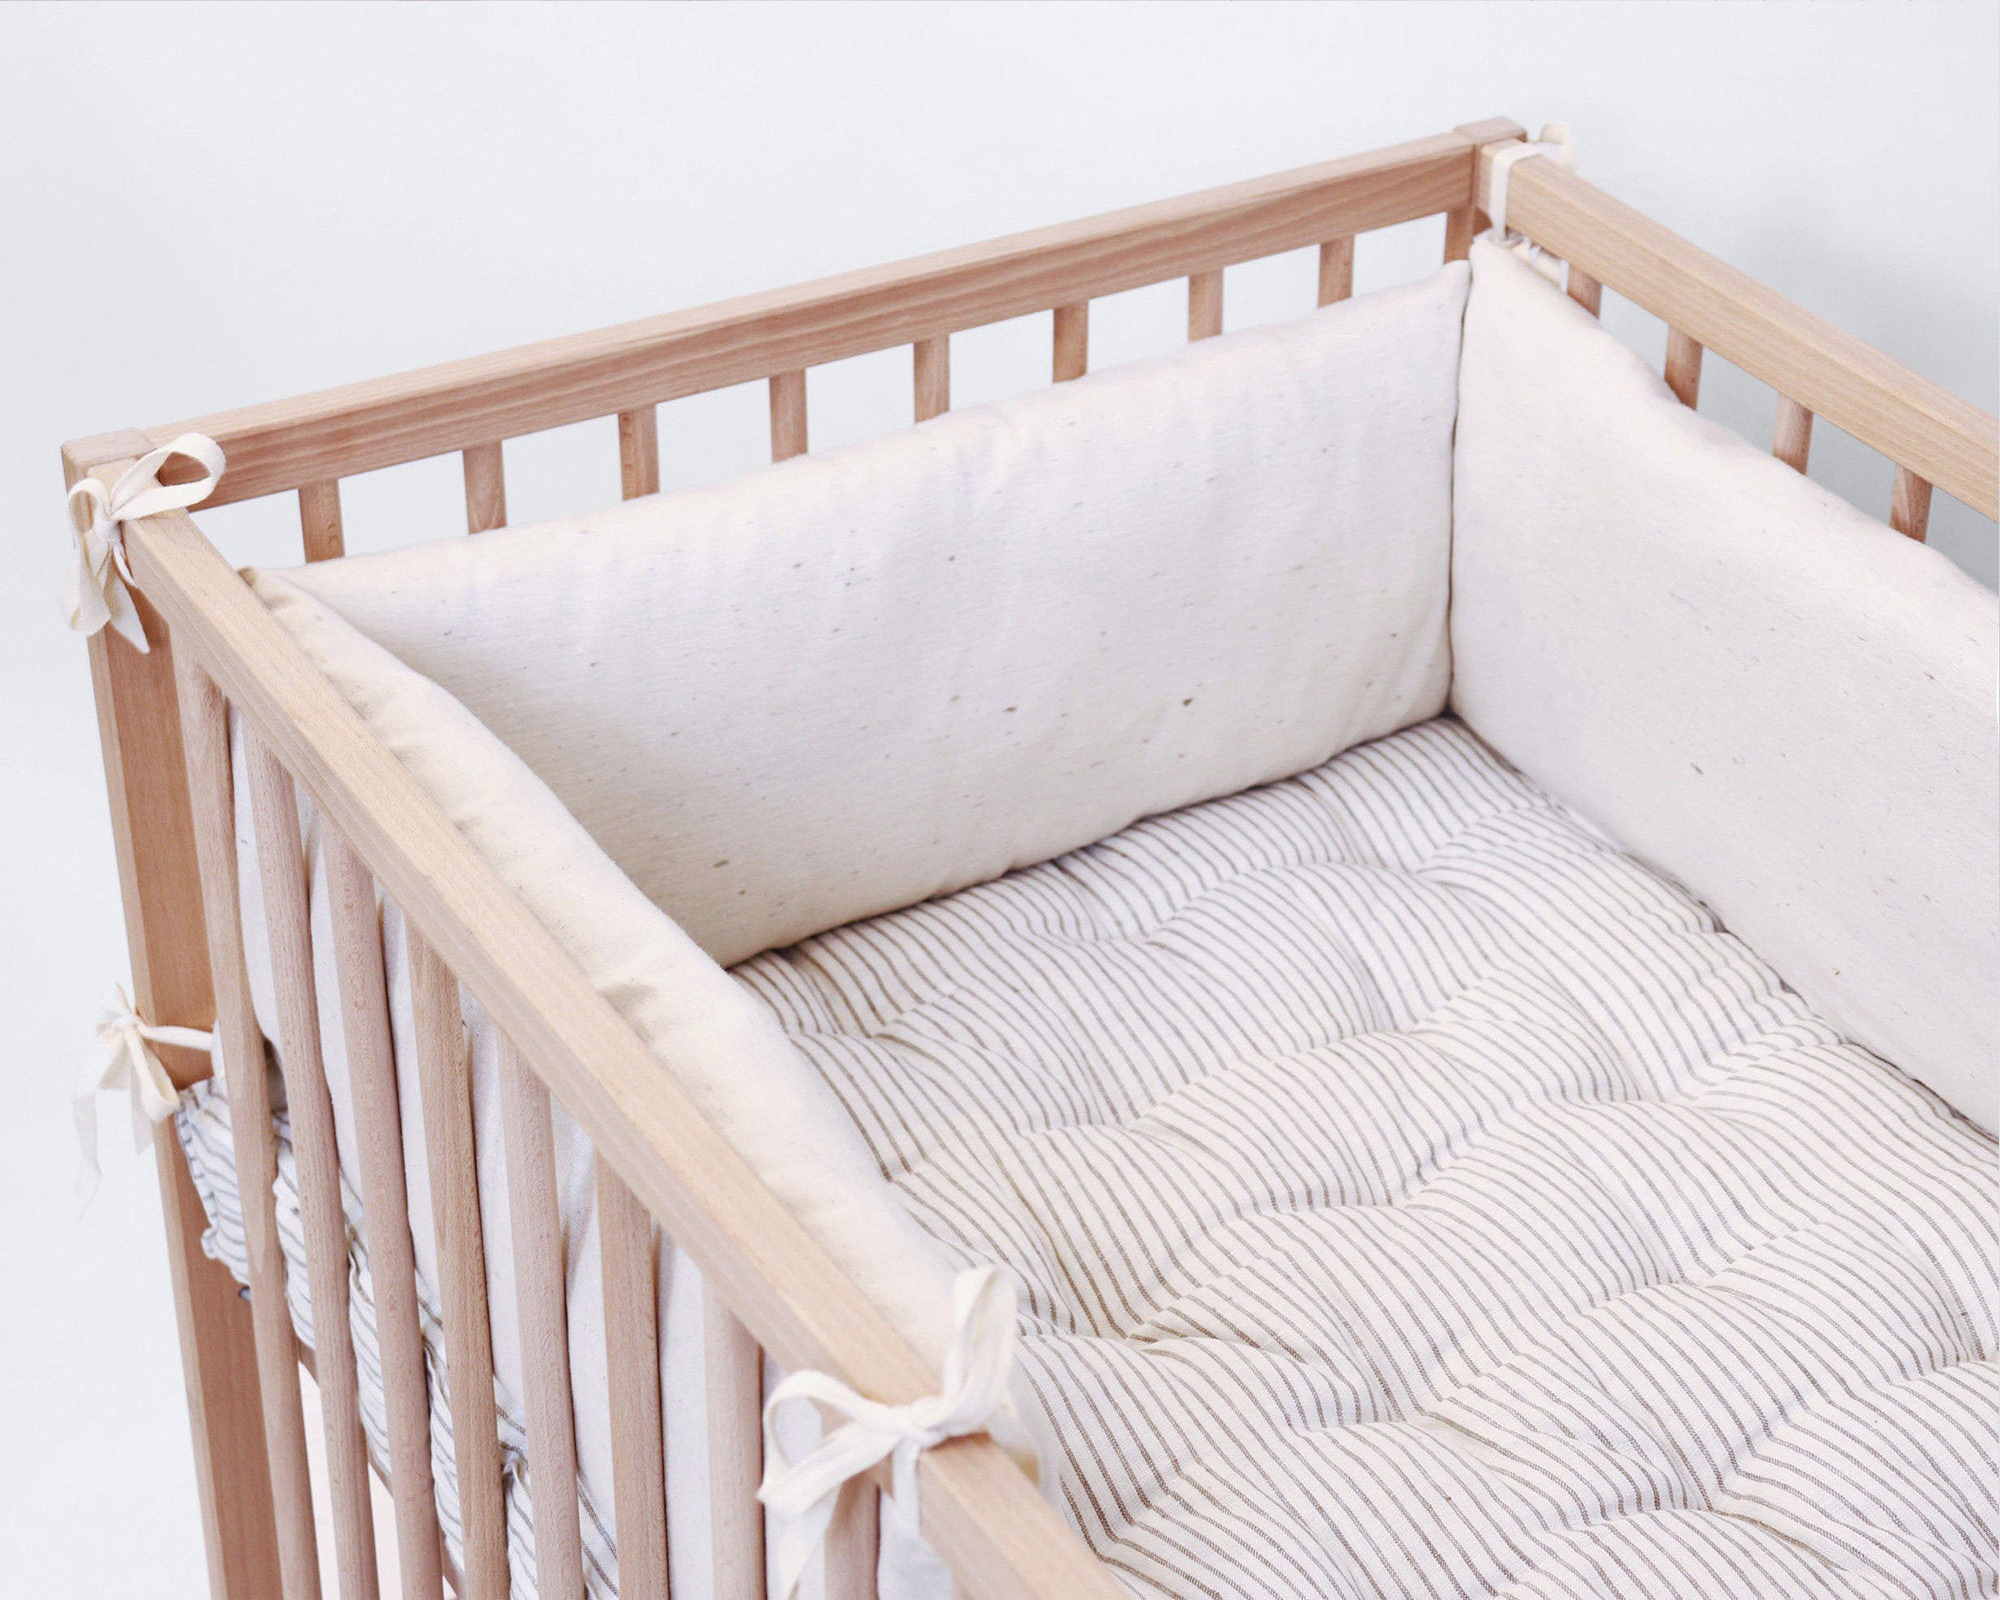 baby cradle mattress